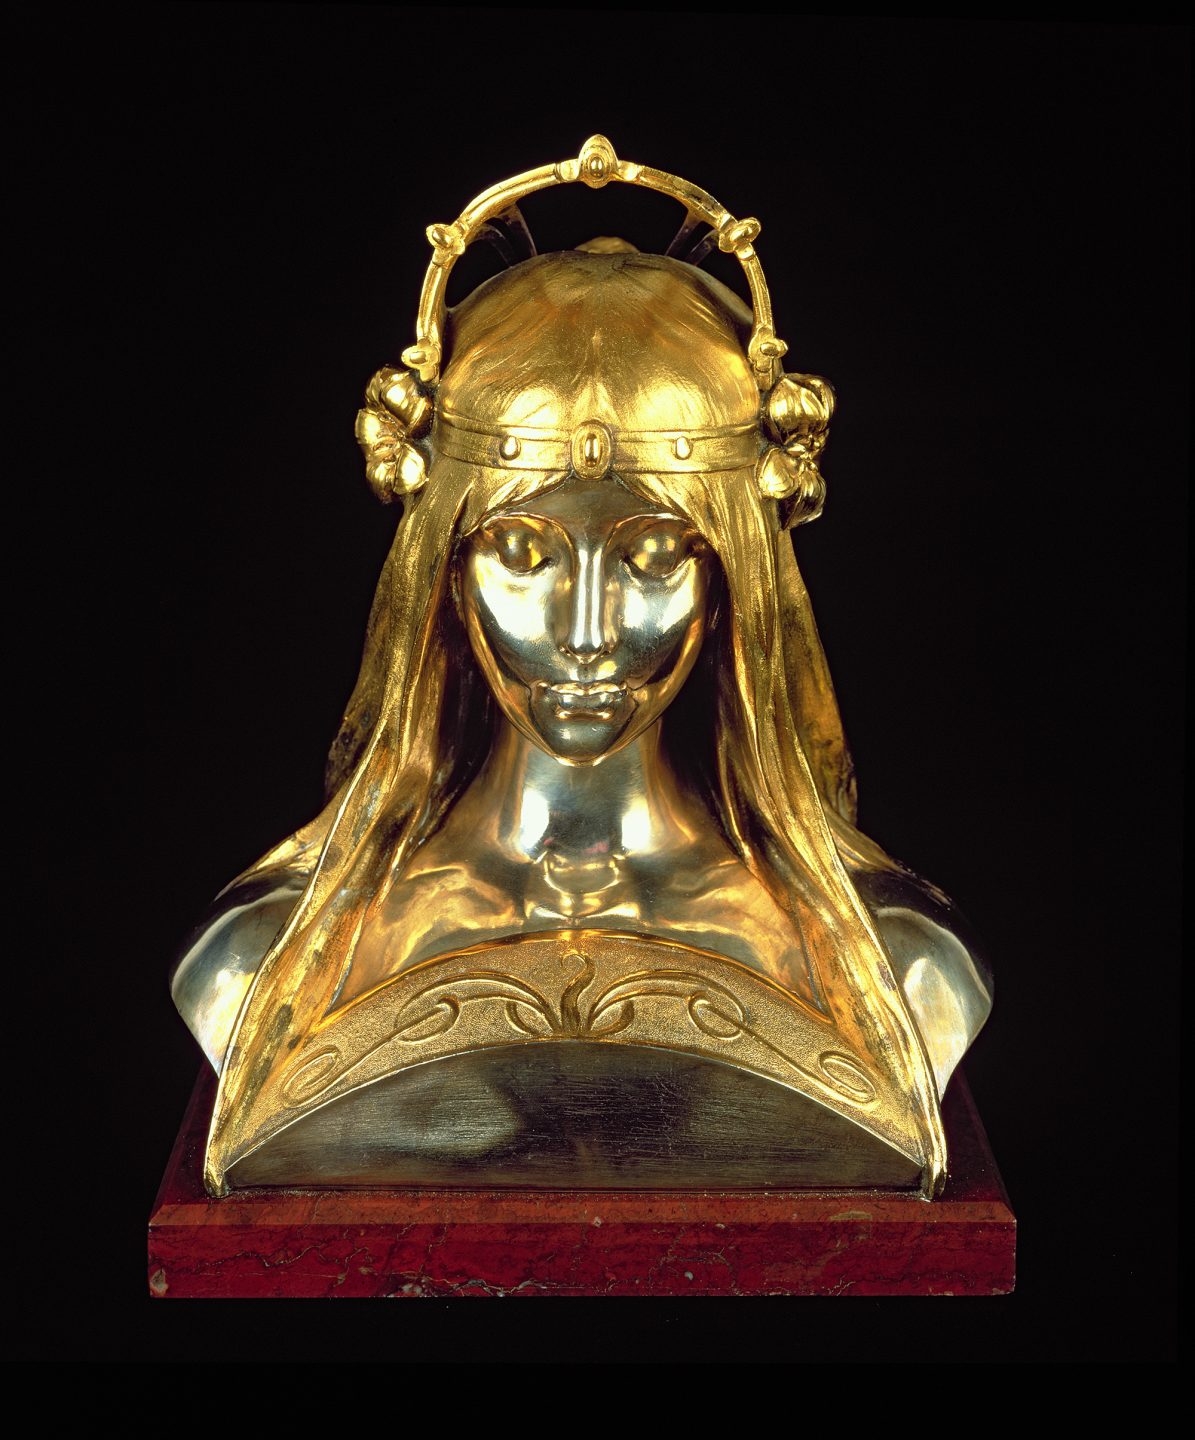 Cabeza de chica, 1900, escultura para la exposición universal de 1900 .